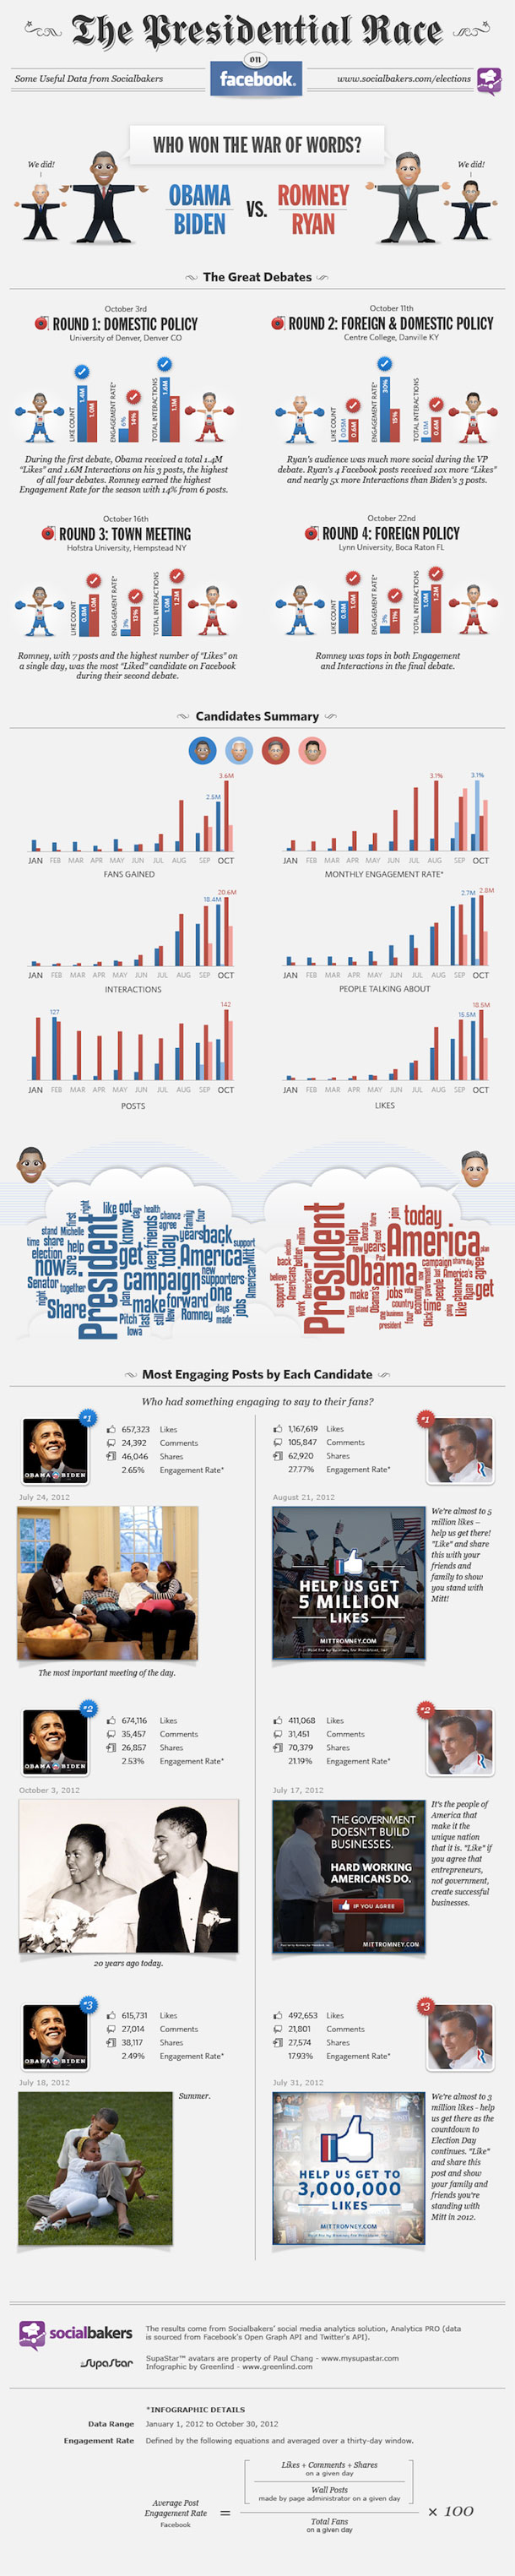 infographic-obama-v-romney-final